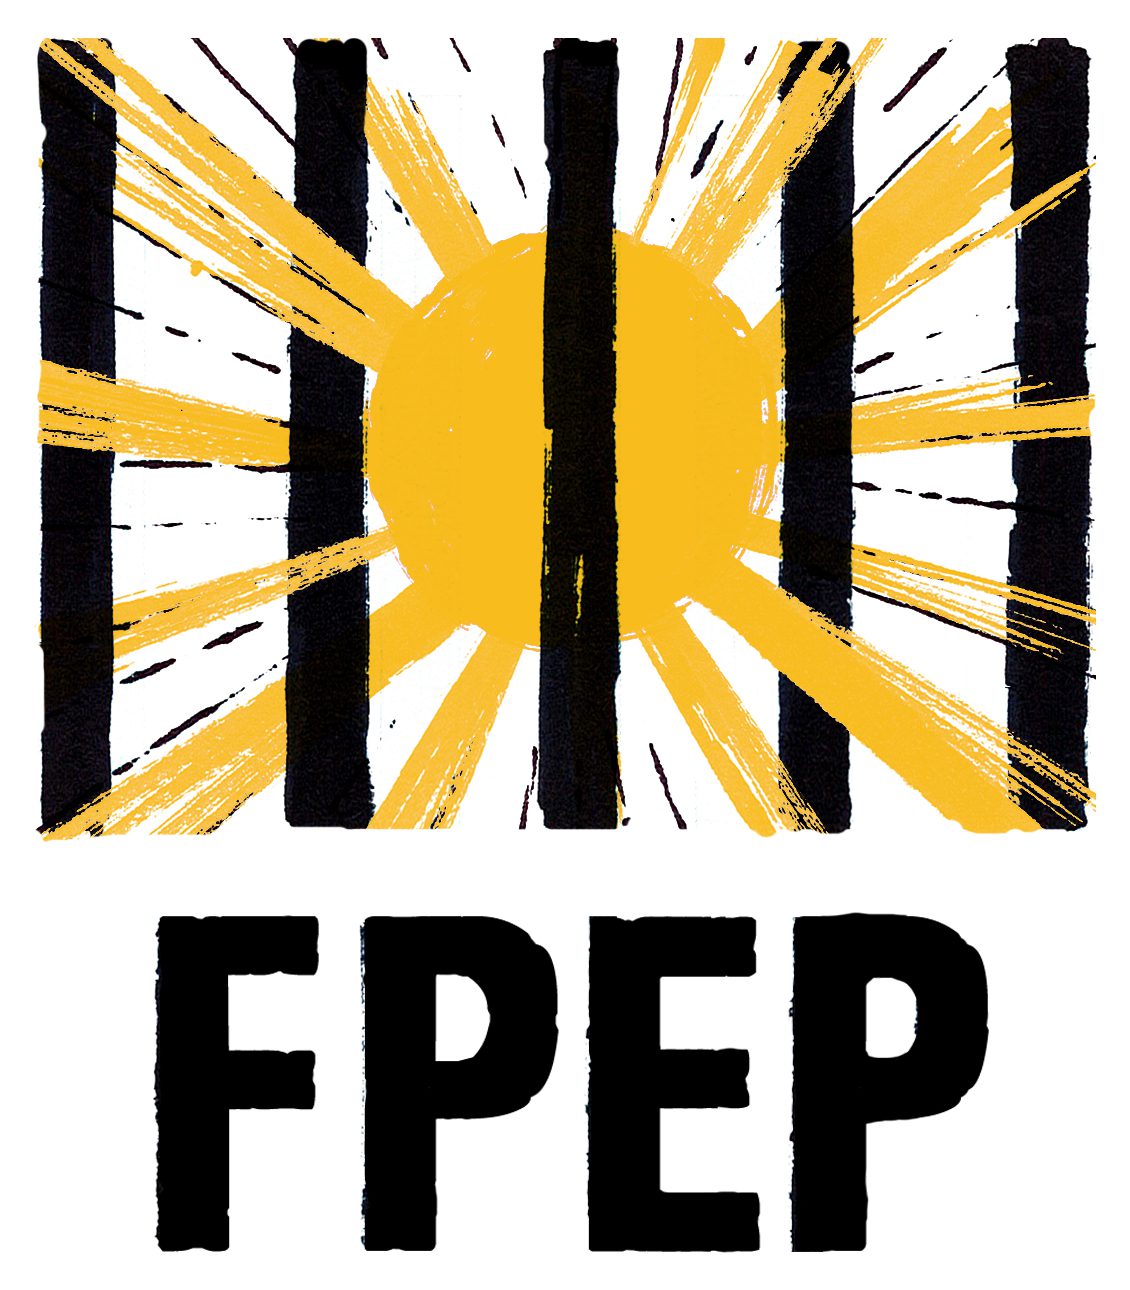 Illustrated sun shining through bars accompanied by acronym FPEP